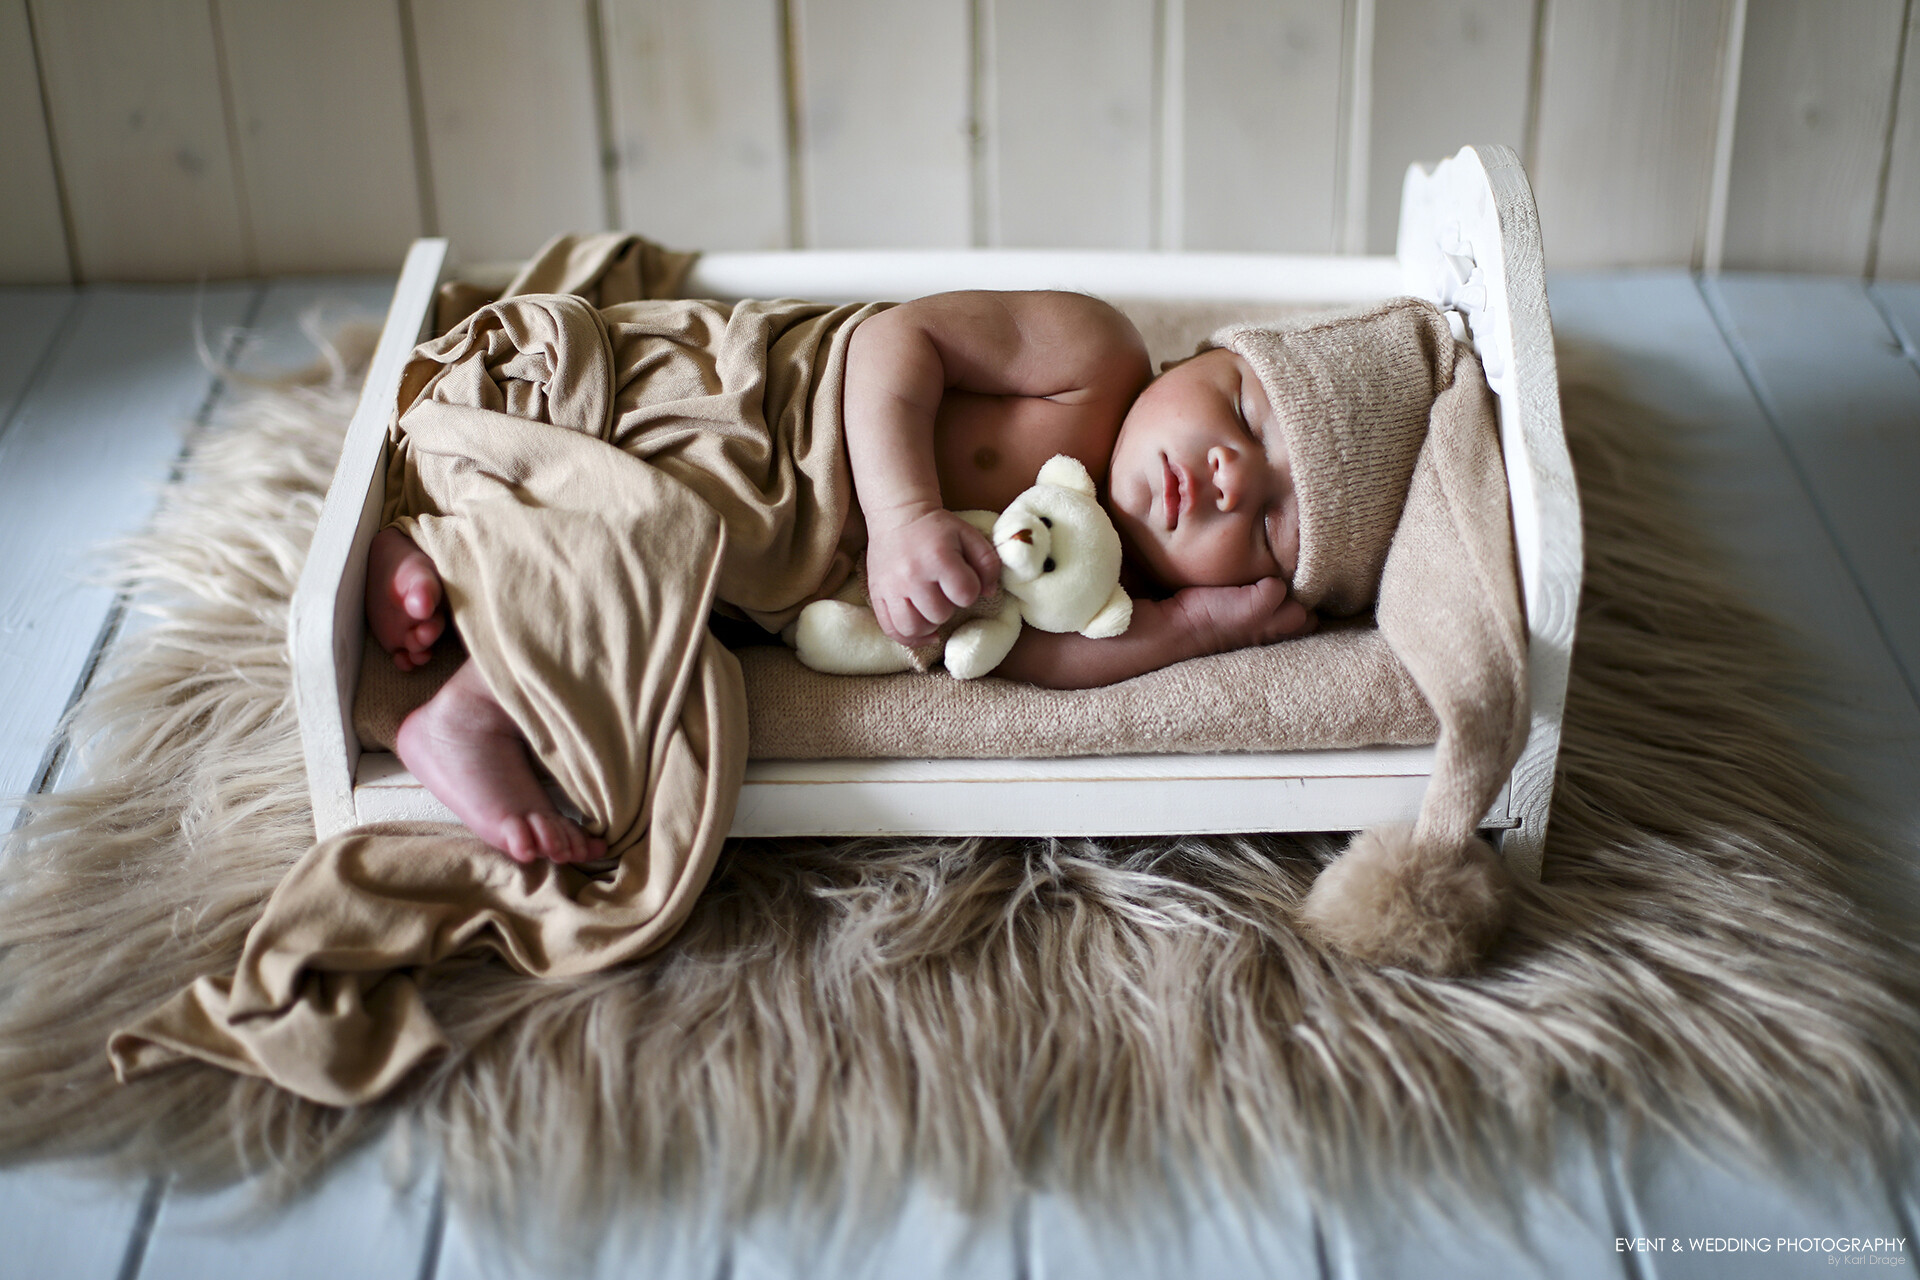 Newborn baby asleep on a wooden bed photo prop